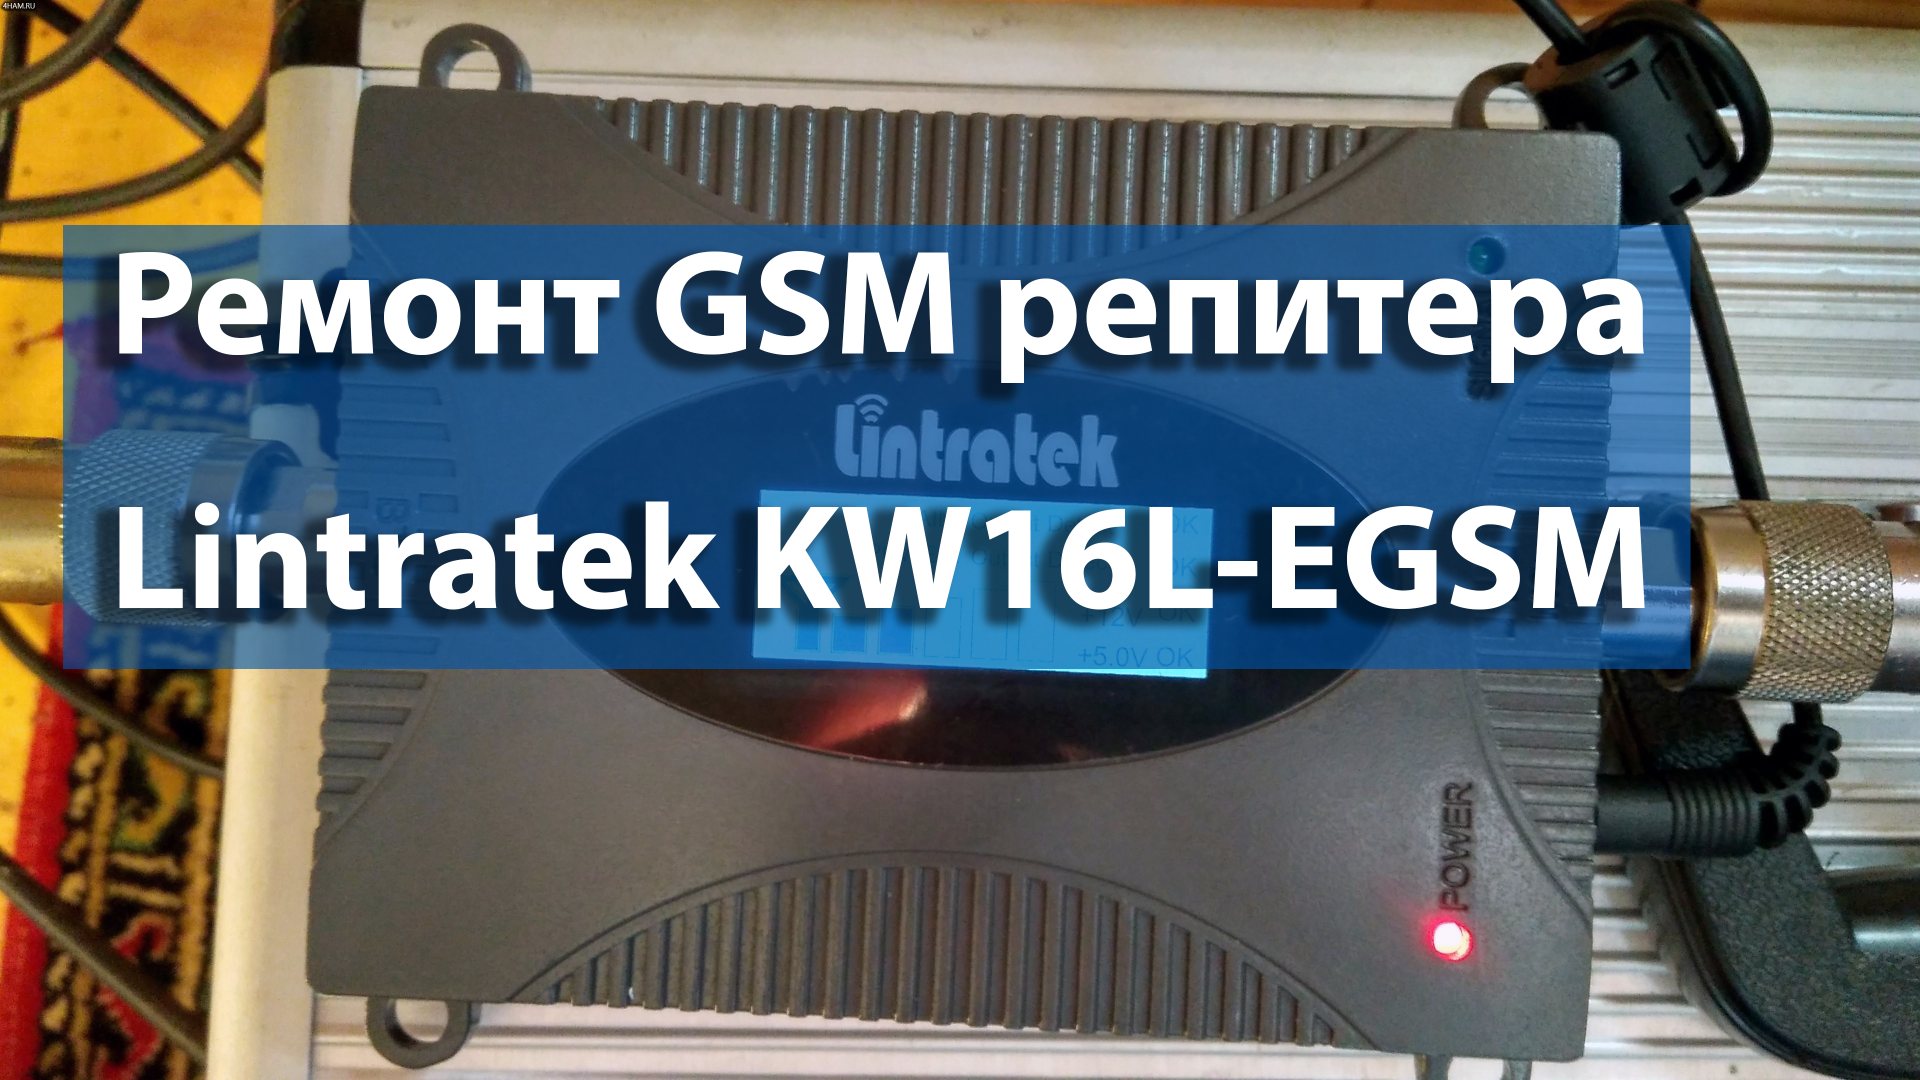 Ремонт EGSM 900 репитера Lintratek KW16L-EGSM